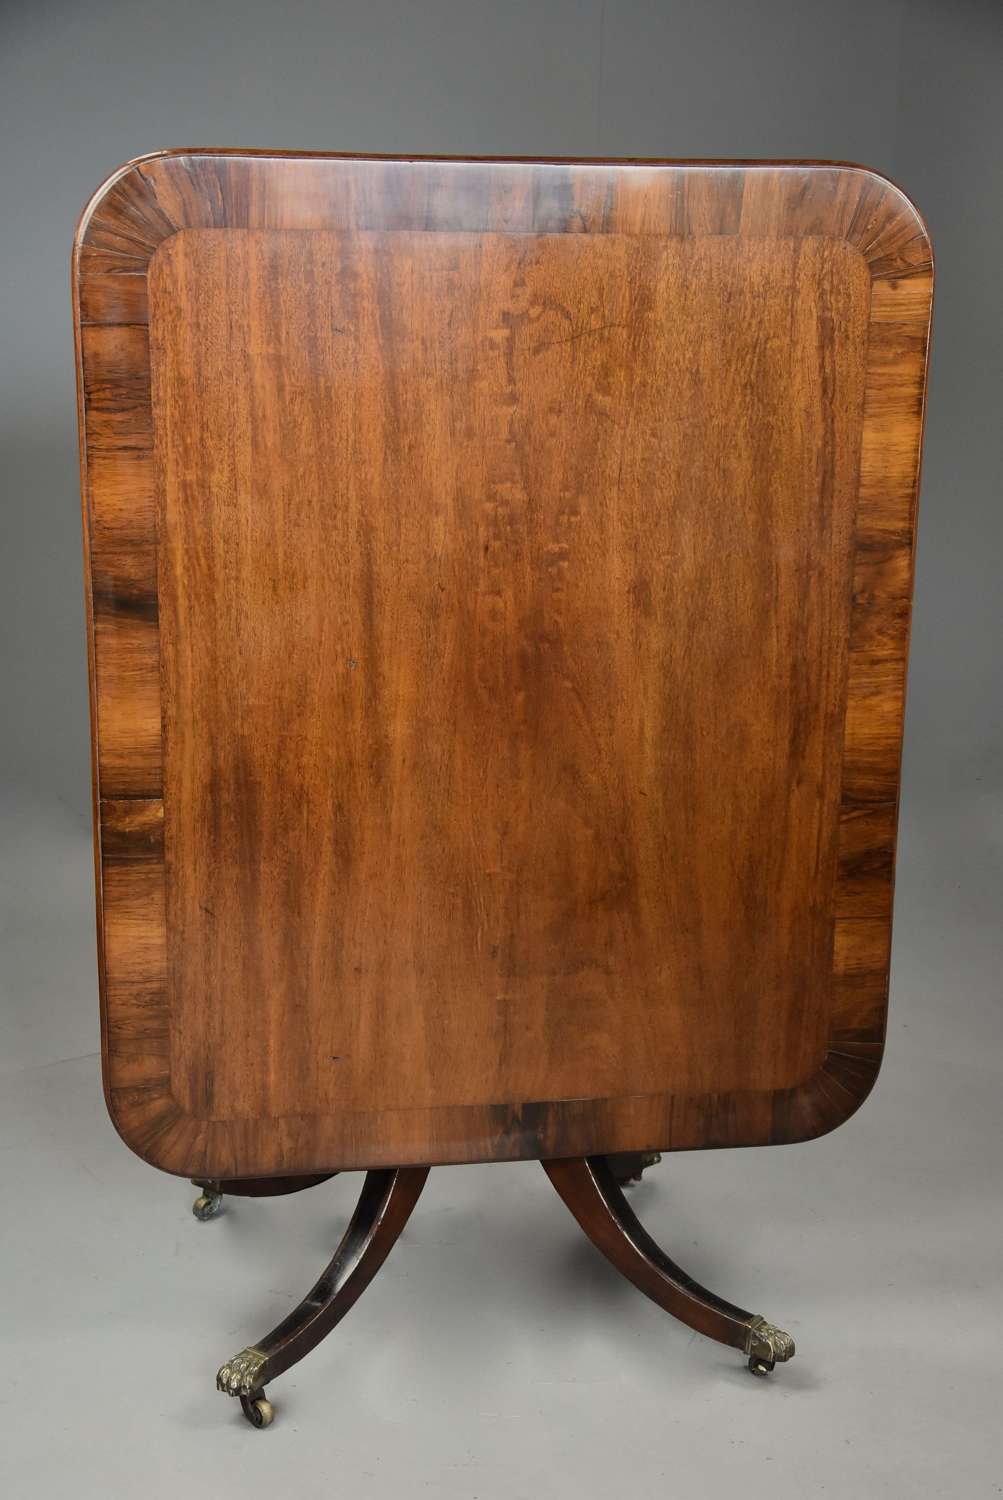 Early 19th century Regency mahogany tilt top breakfast table